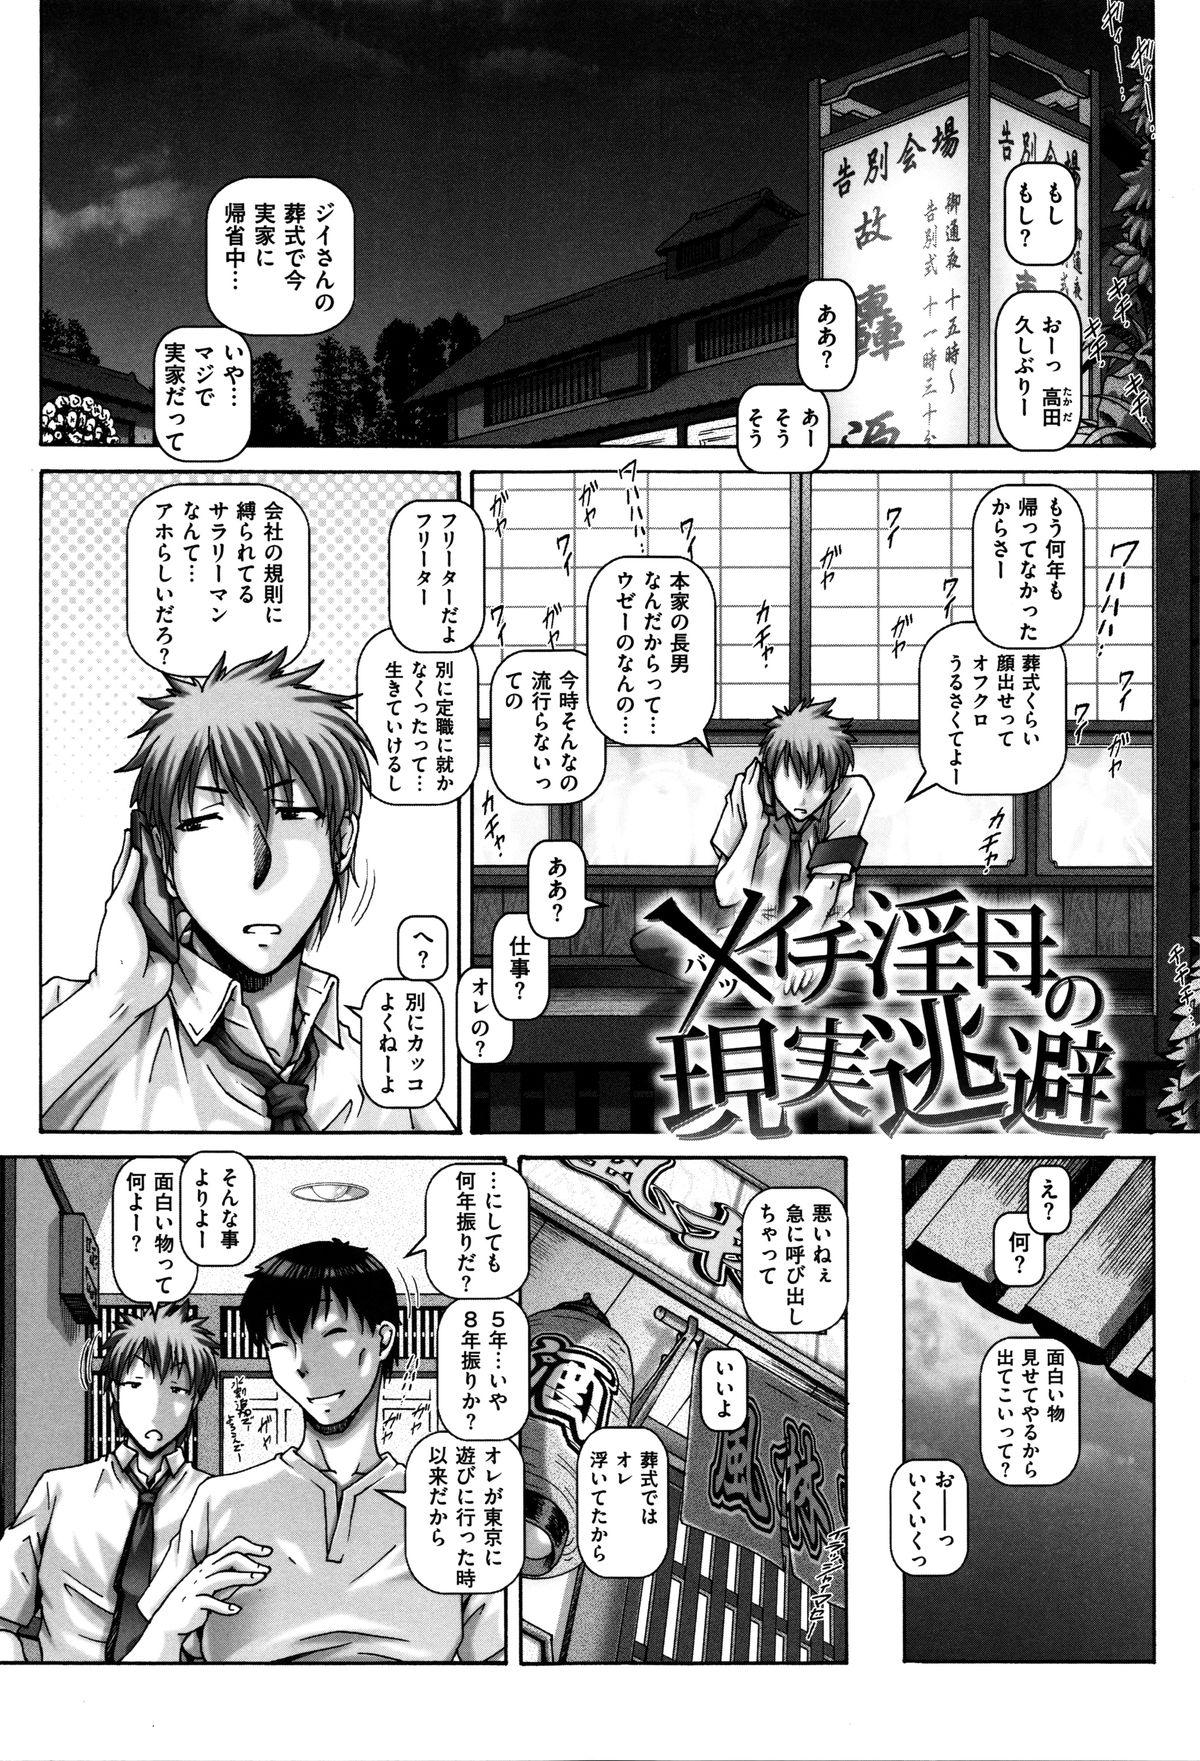 Namorada Kachiku Ane - chapter 1,5,7 & 9 And - Page 2